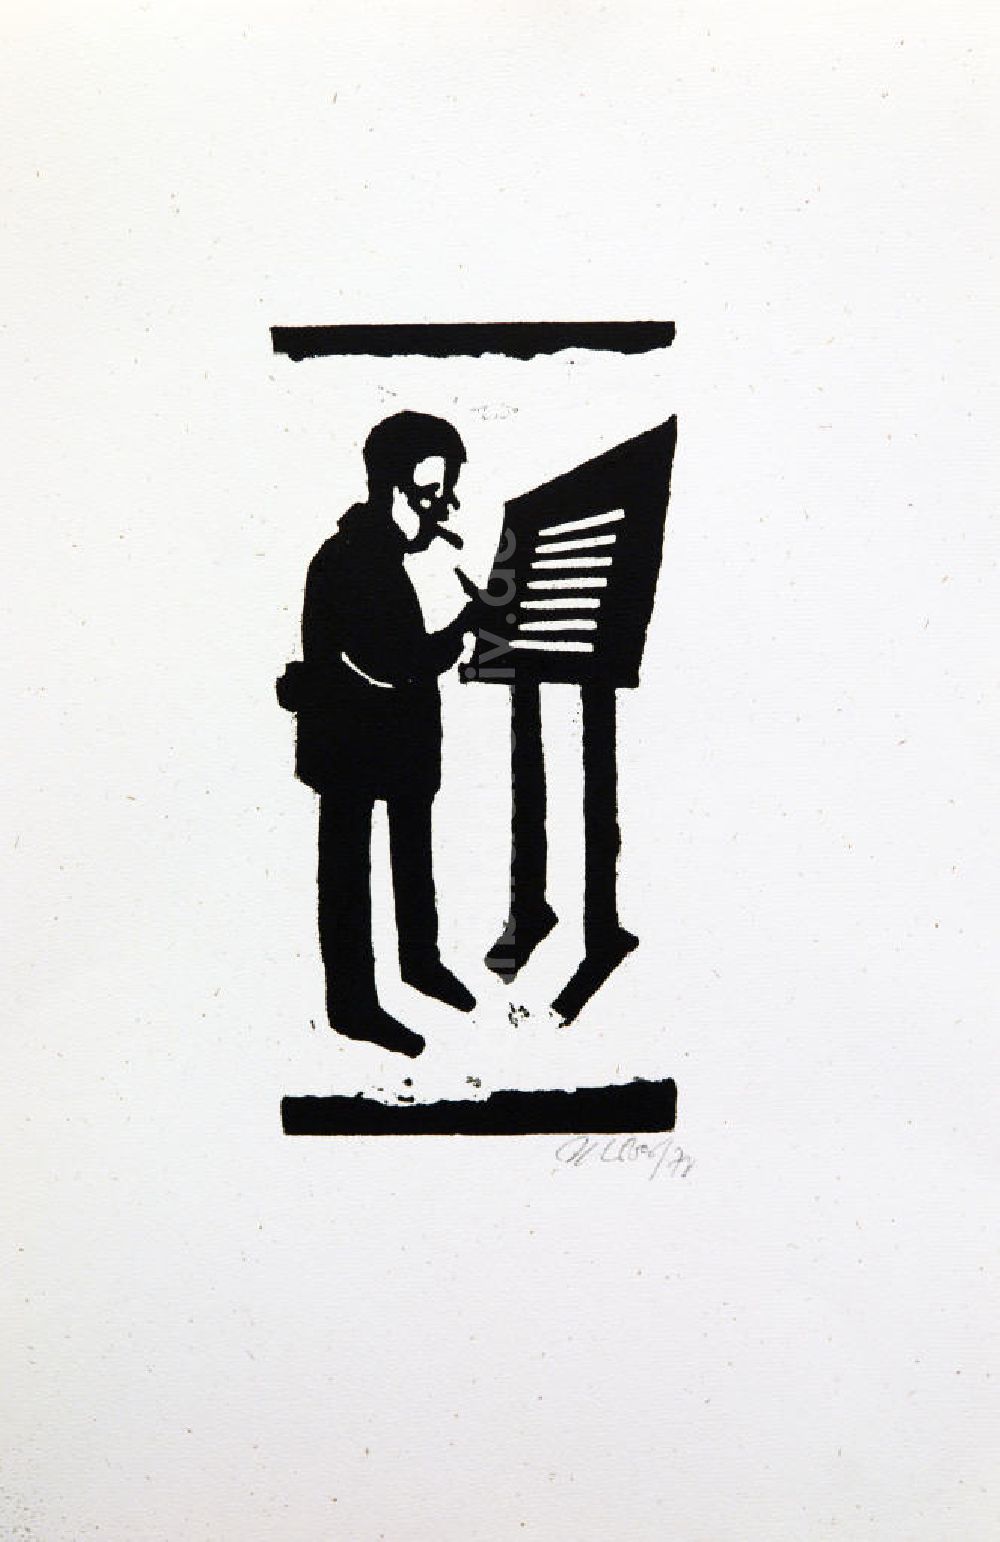 Berlin: Grafik von Herbert Sandberg über Bertolt Brecht 1978